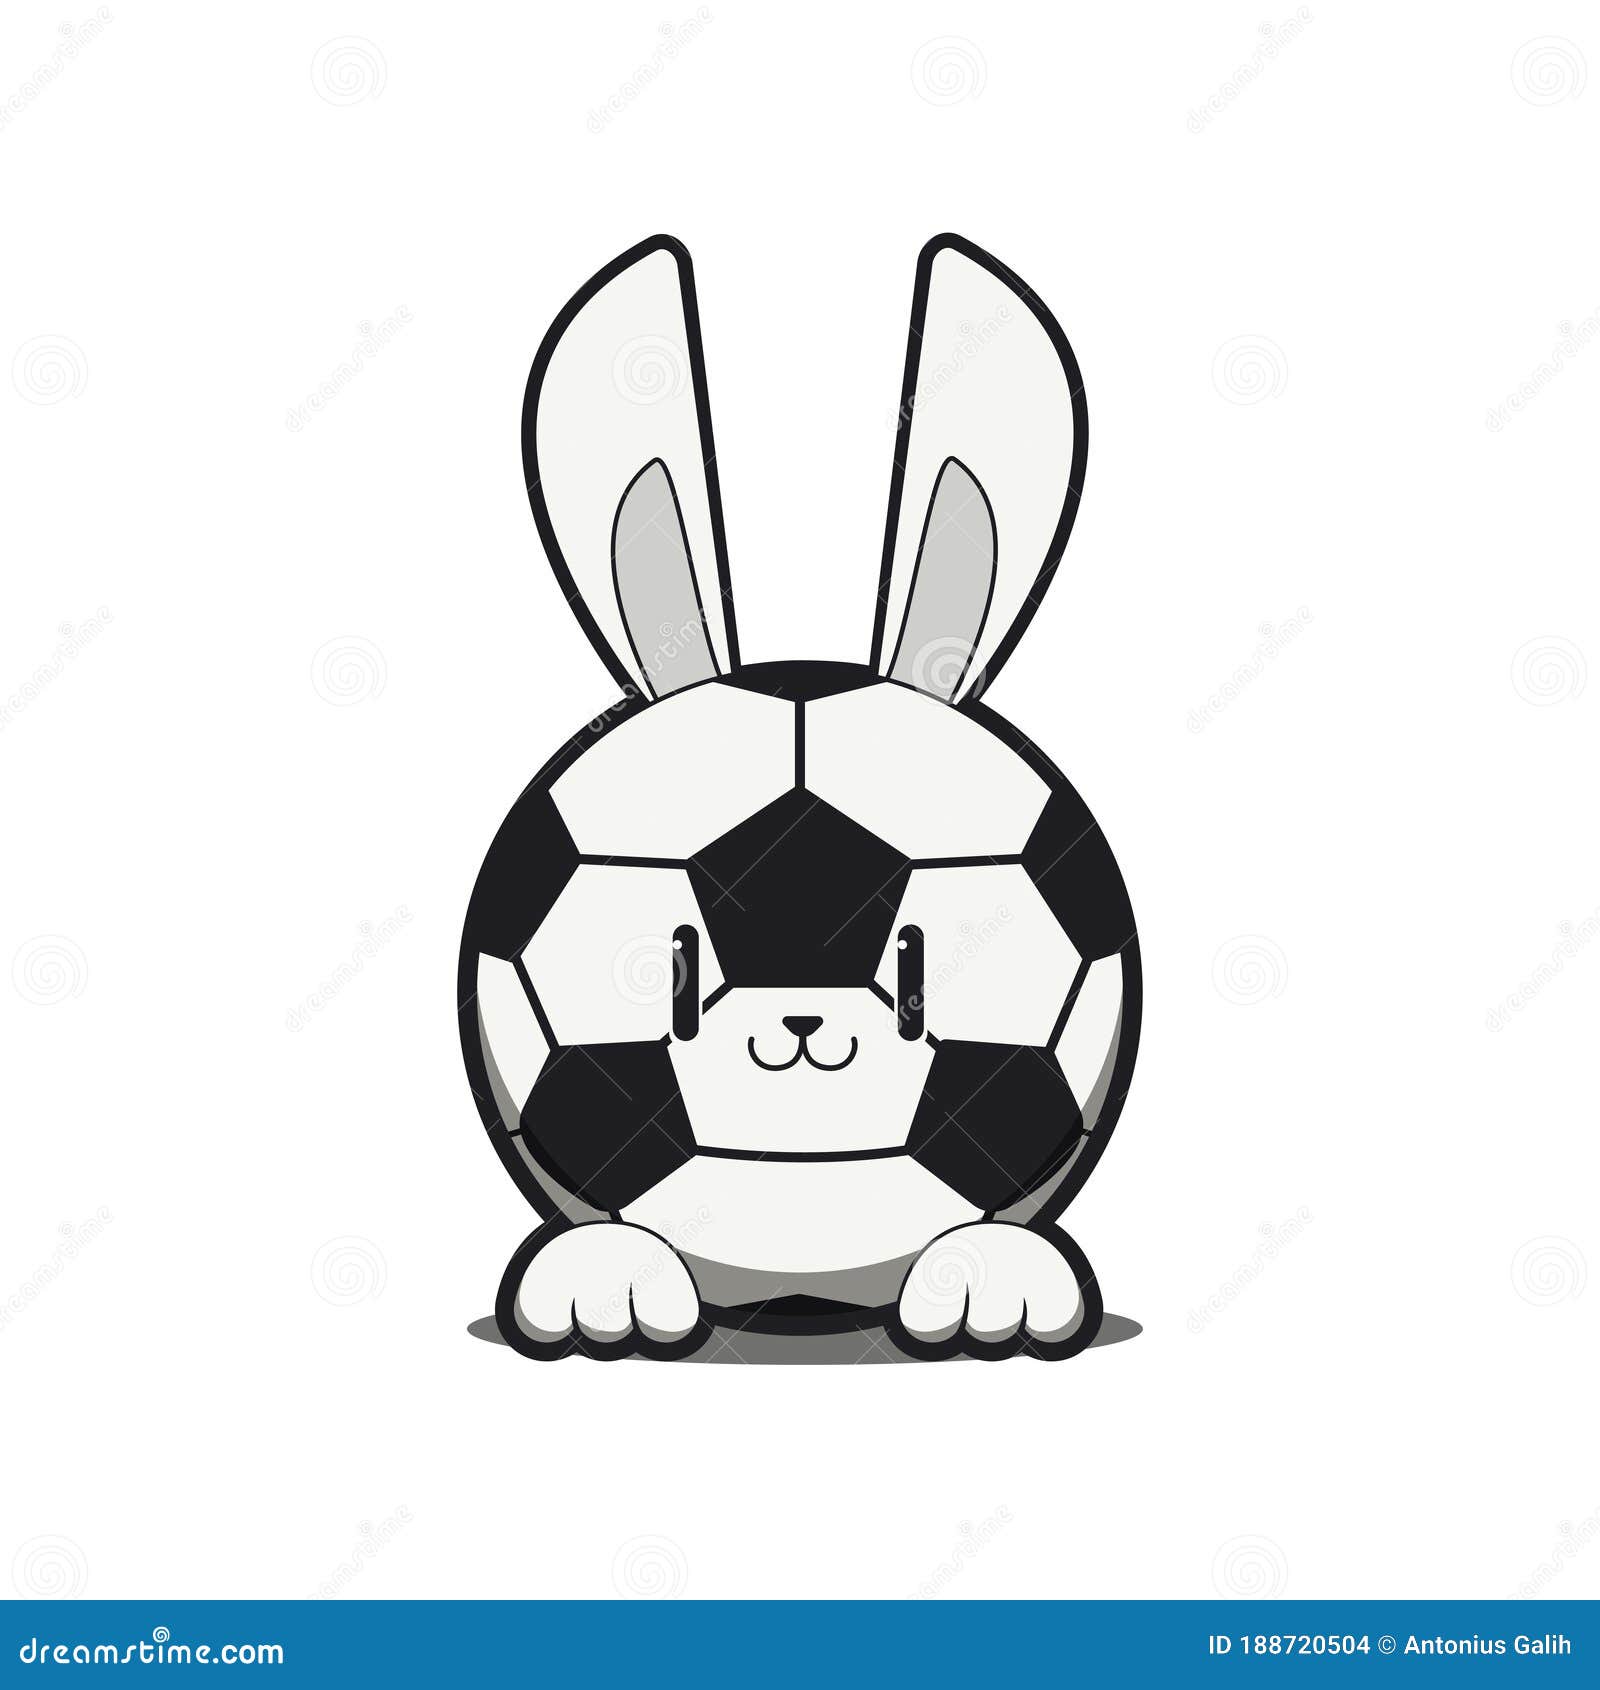 Football Mascot Character Illustration with Bunny Ear Stock Vector -  Illustration of mascot, design: 188720504